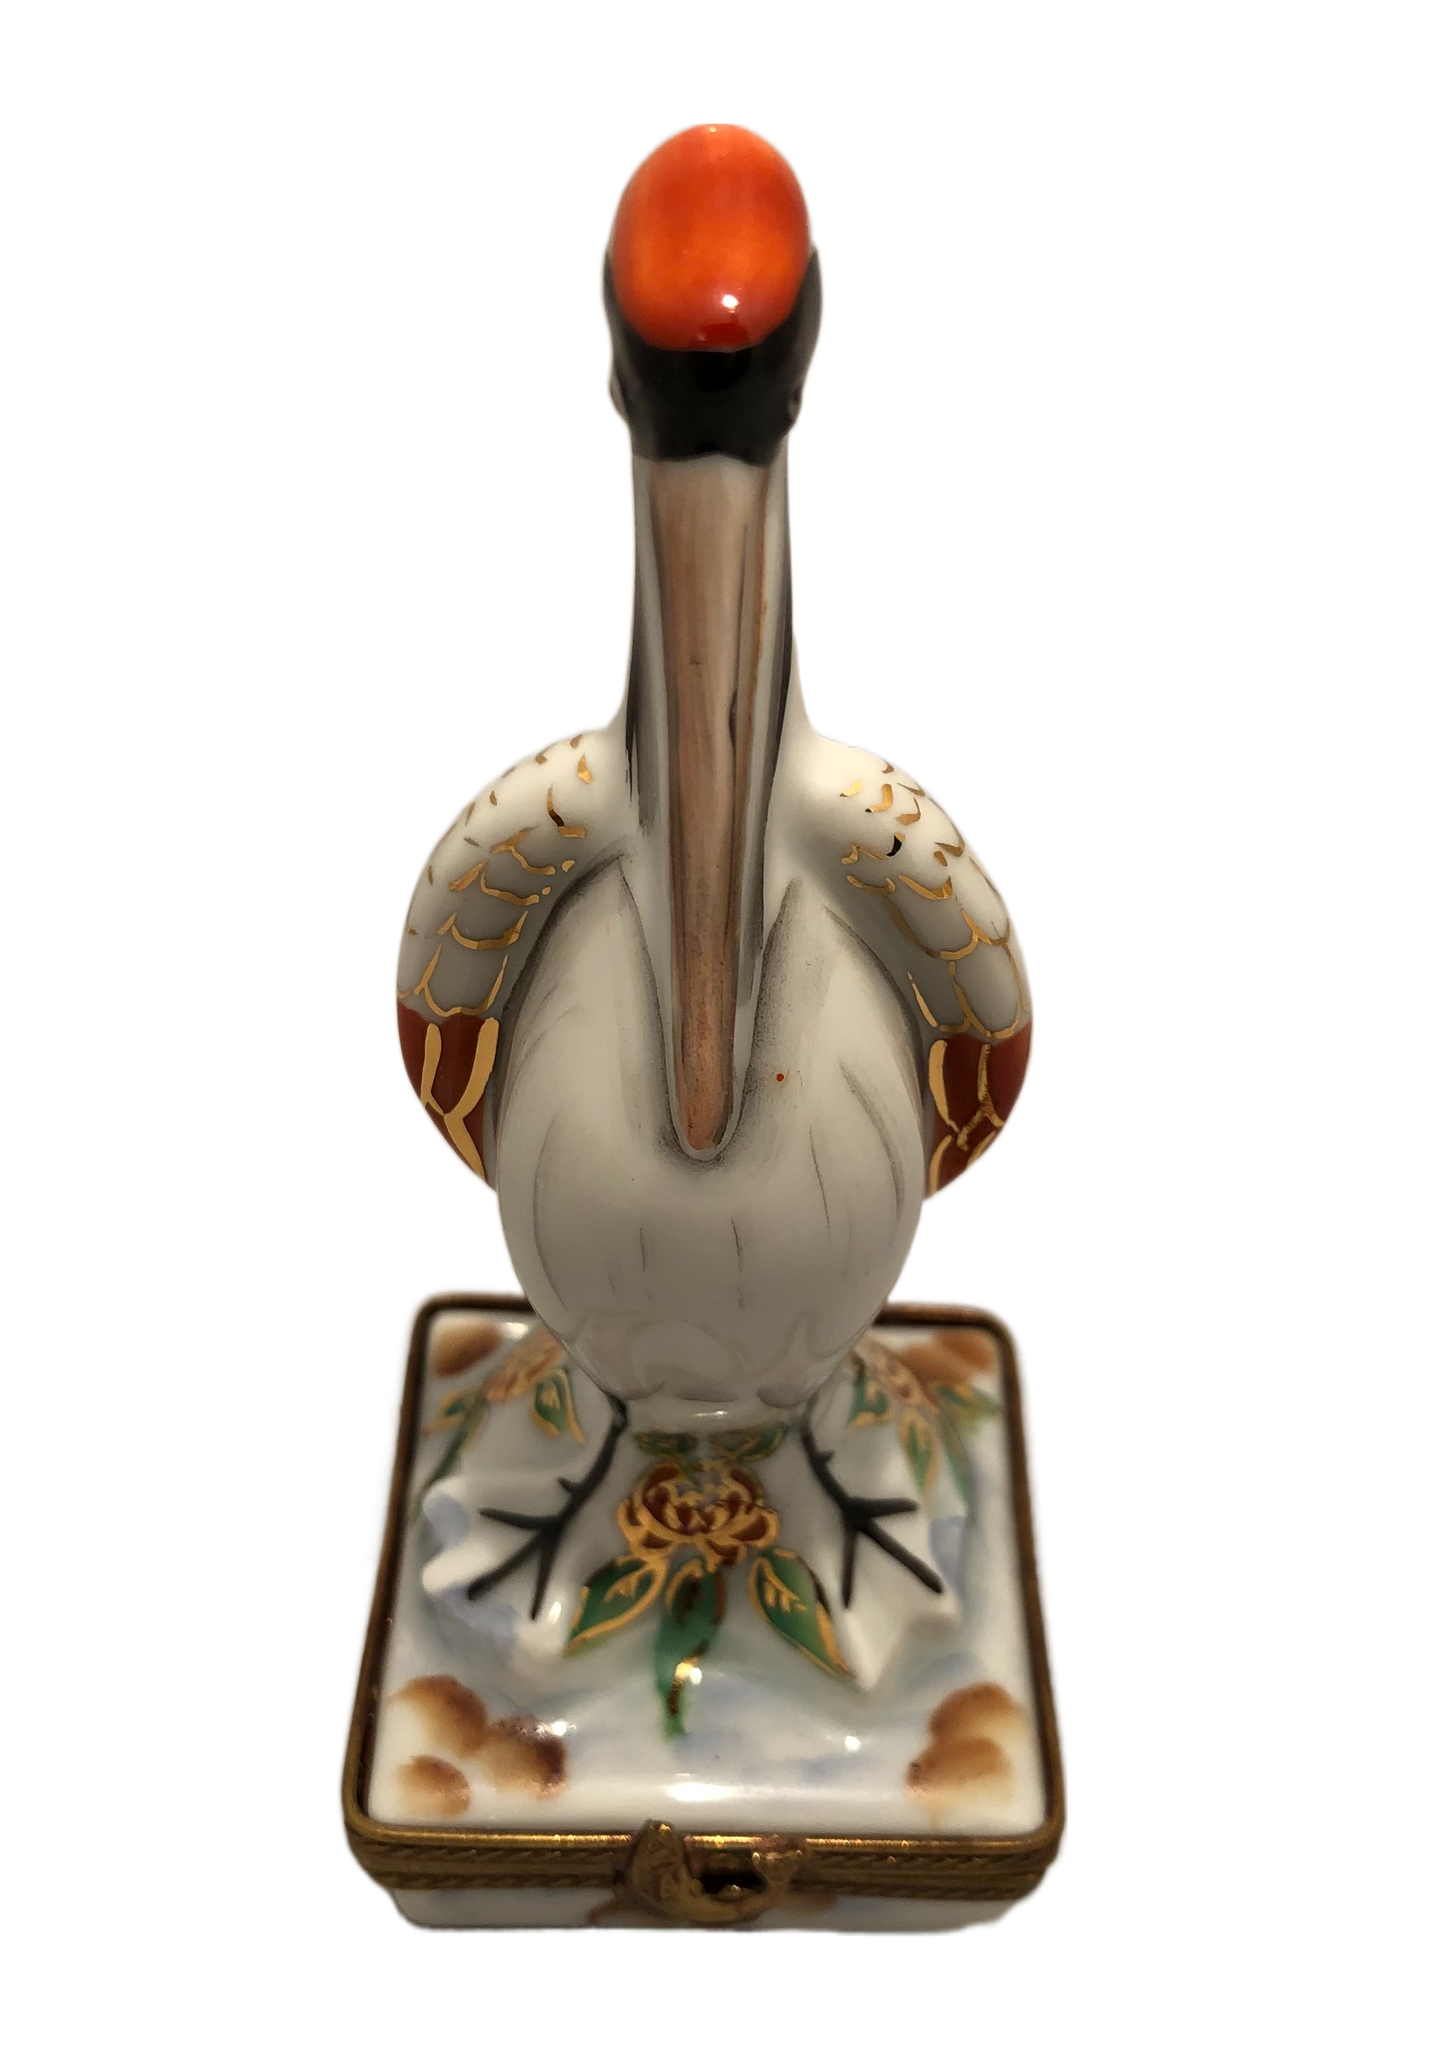 Graceful Avian Elegance: Hand-Painted Limoges Pelican Box with Striking Red Head